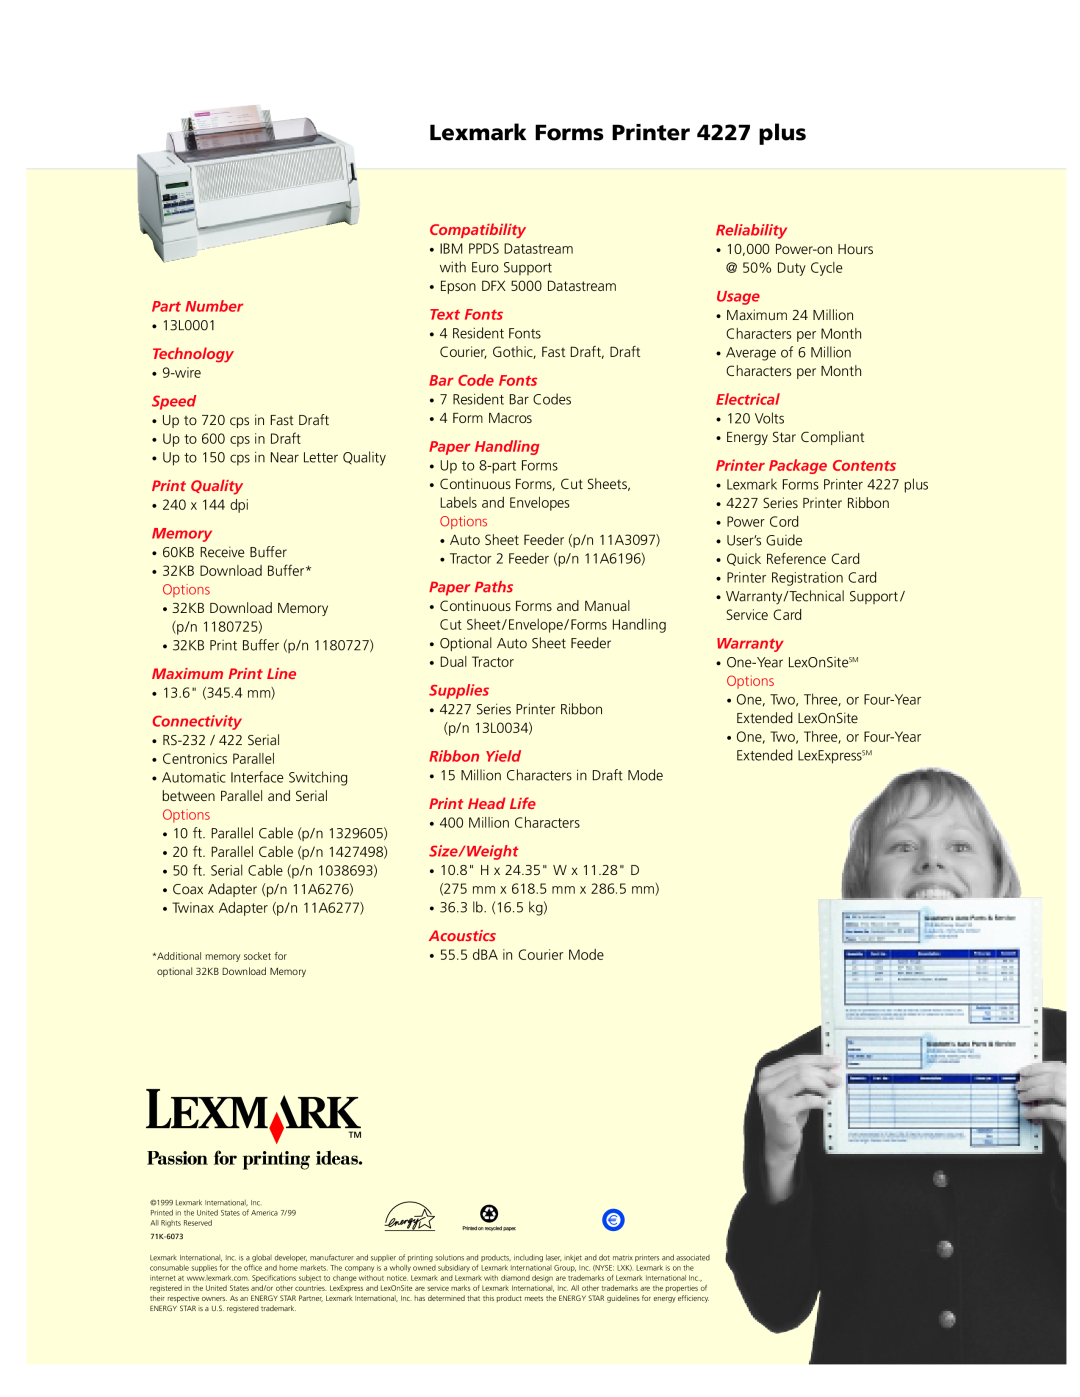 Lexmark 4227 PLUS manual Lexmark Forms Printer 4227 plus 